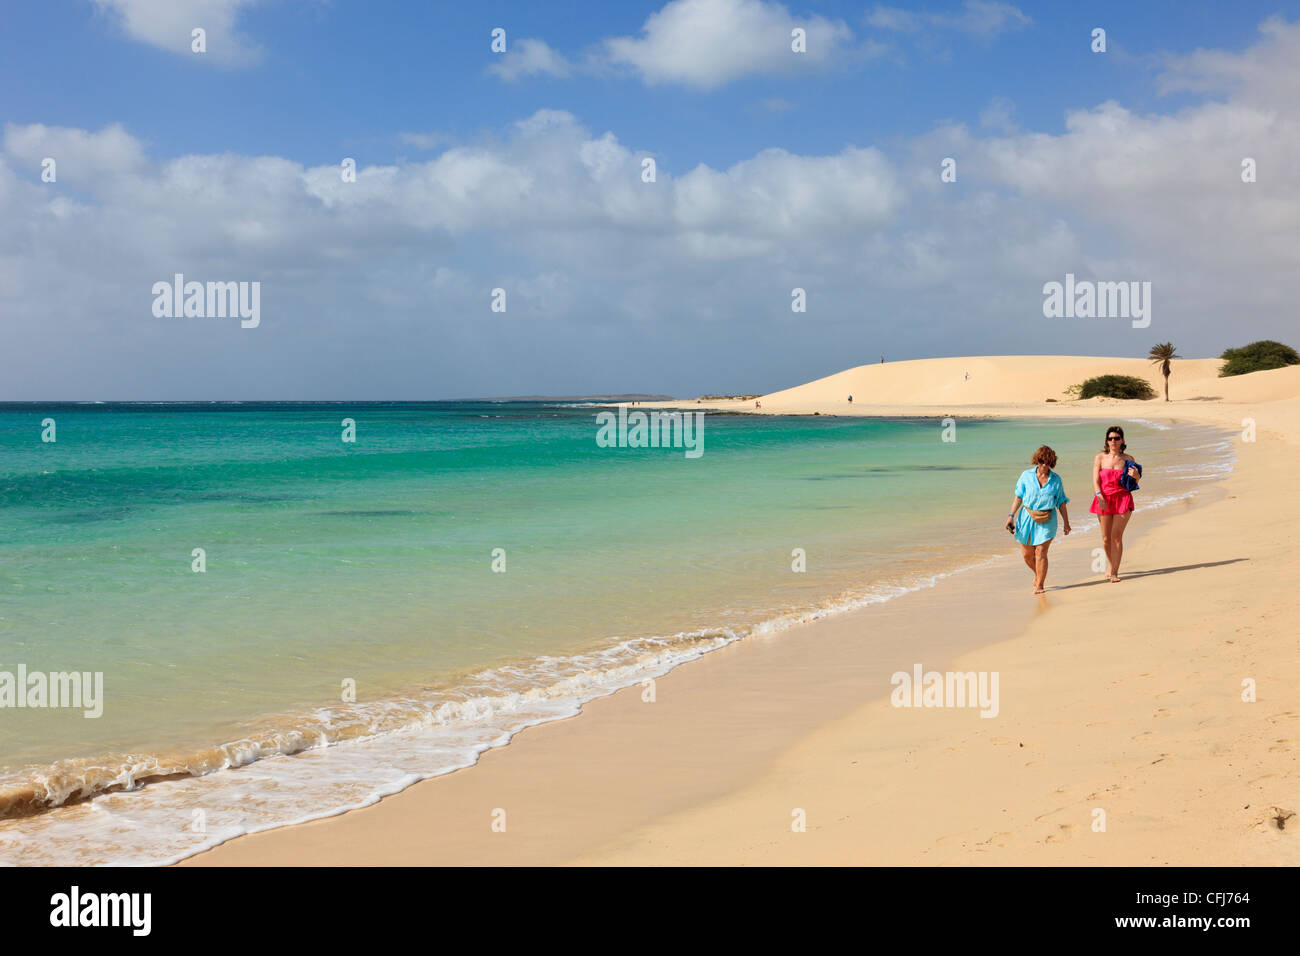 Praia de Chaves, Boa Vista, Cape Verde Islands. Two women walking along  seashore of quiet white sand beach beside turquoise sea Stock Photo - Alamy